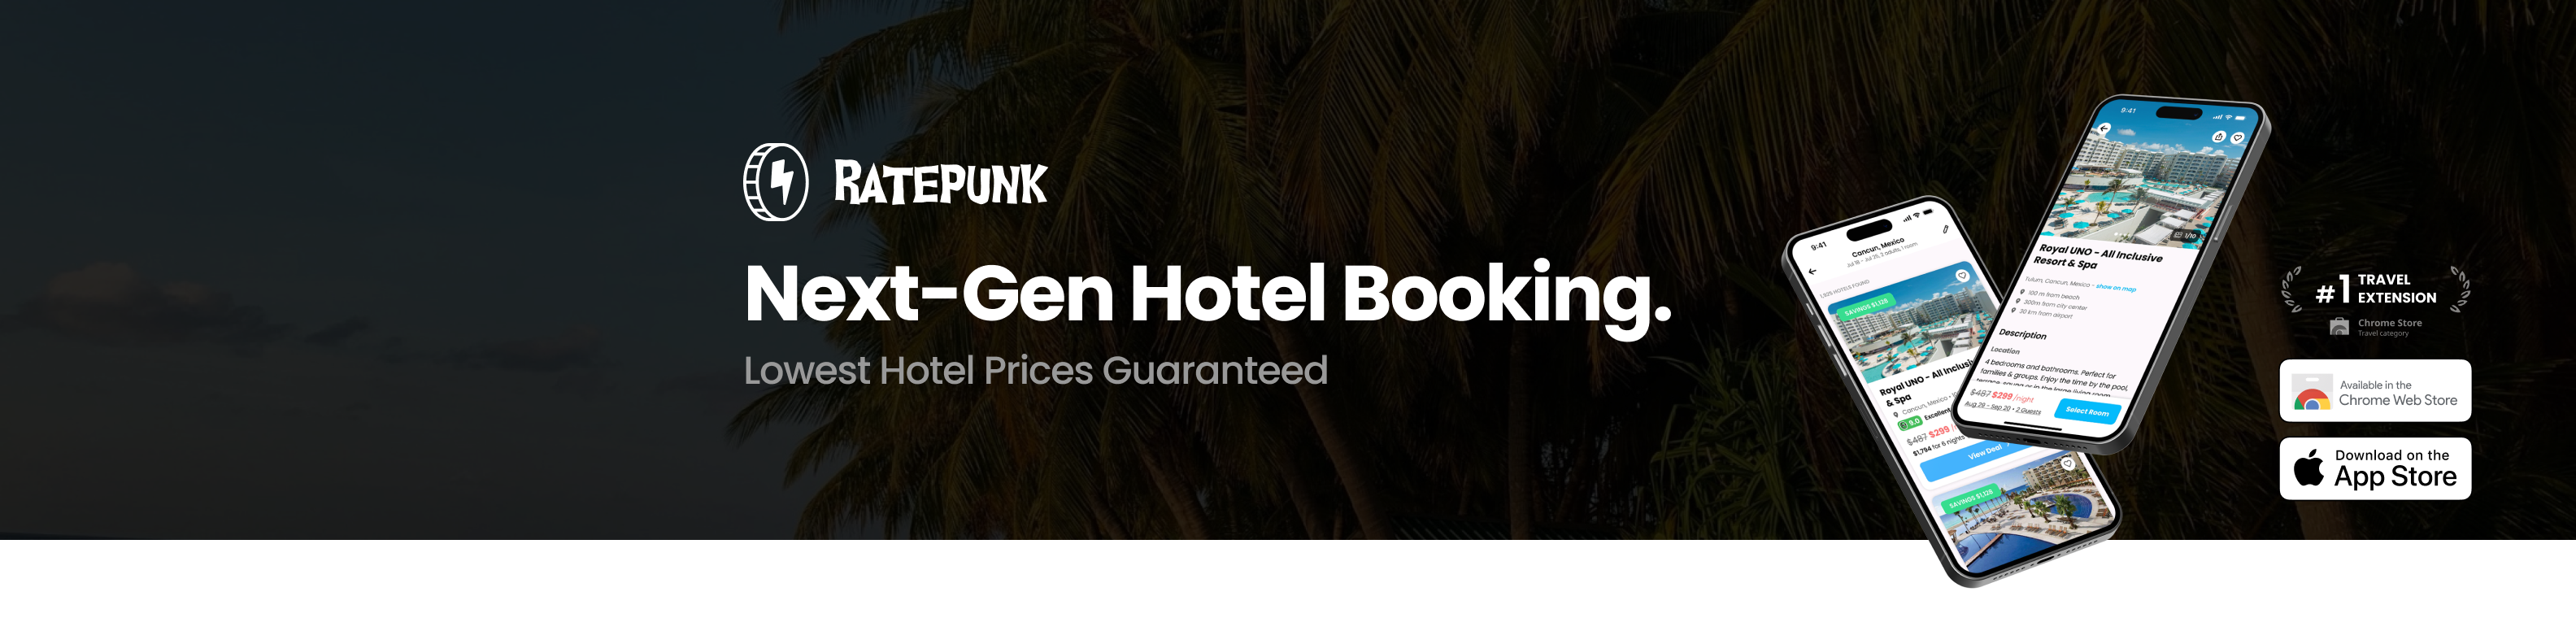 RatePunk - new gen hotel booking platform - lowest hotel price guaranteed